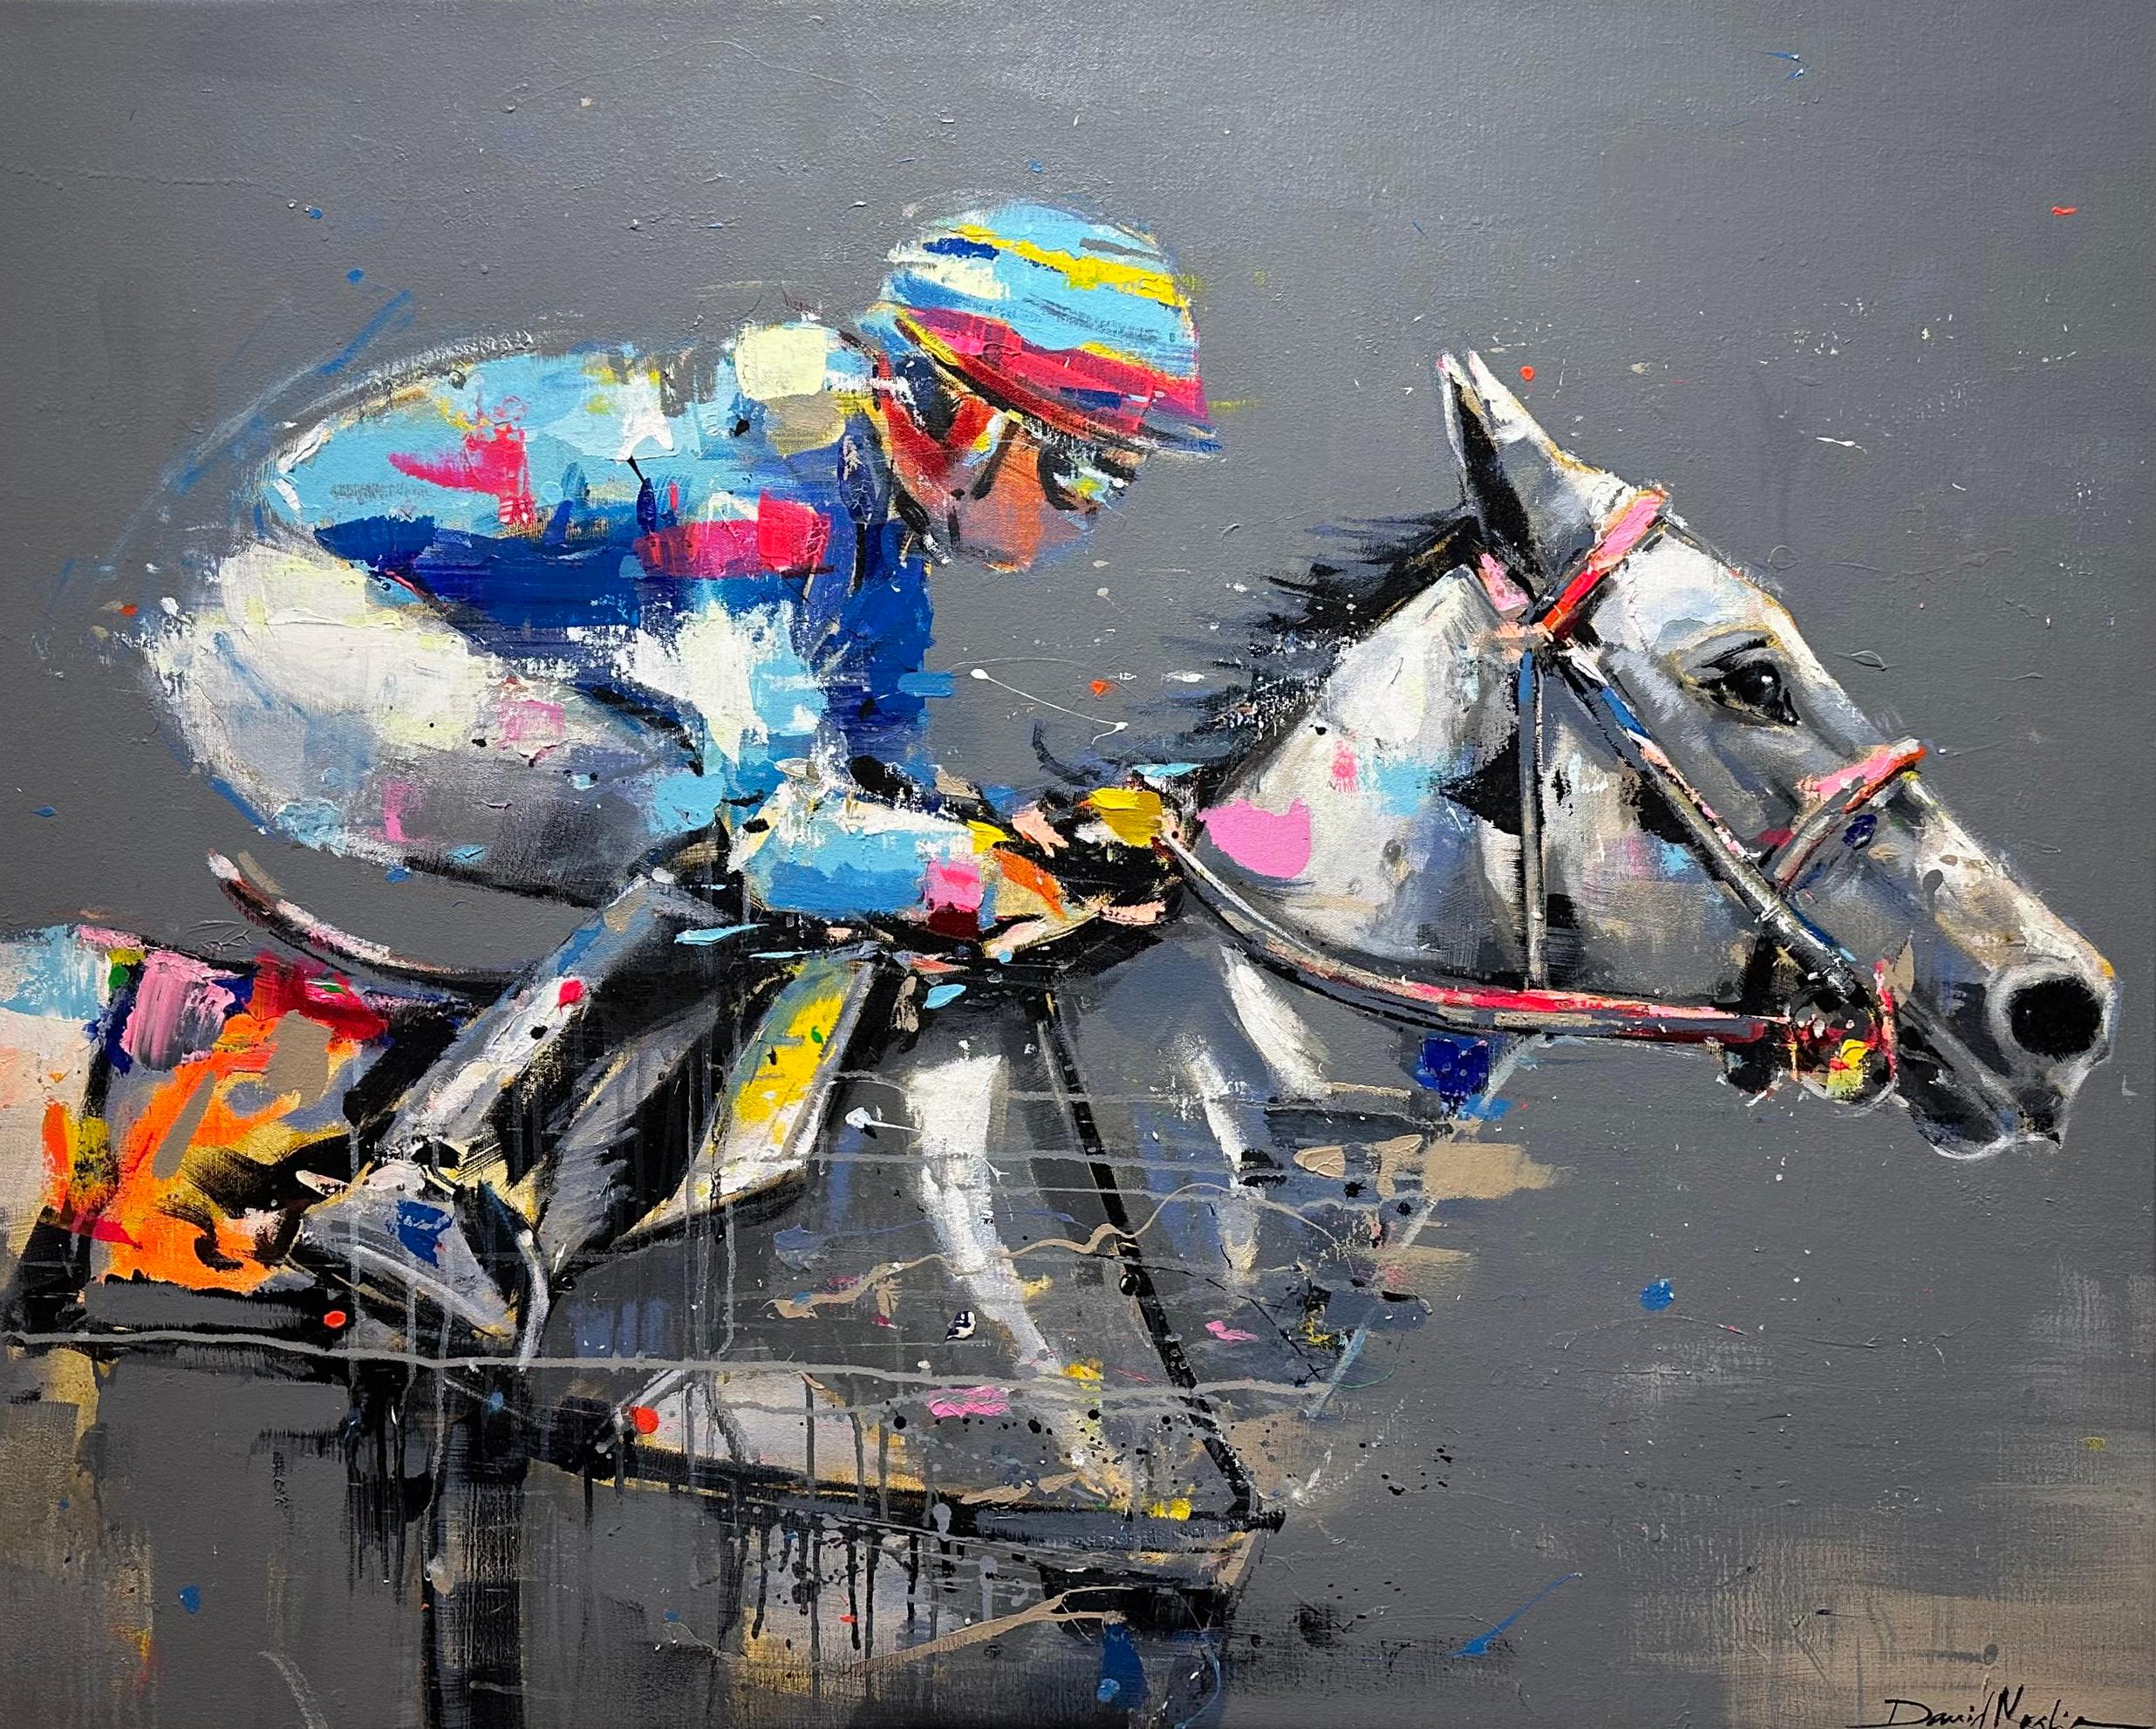 David Noalia  Animal Painting - David Noalia, "Rainbow Race" 36x45 Colorful Horse Race Equine Painting